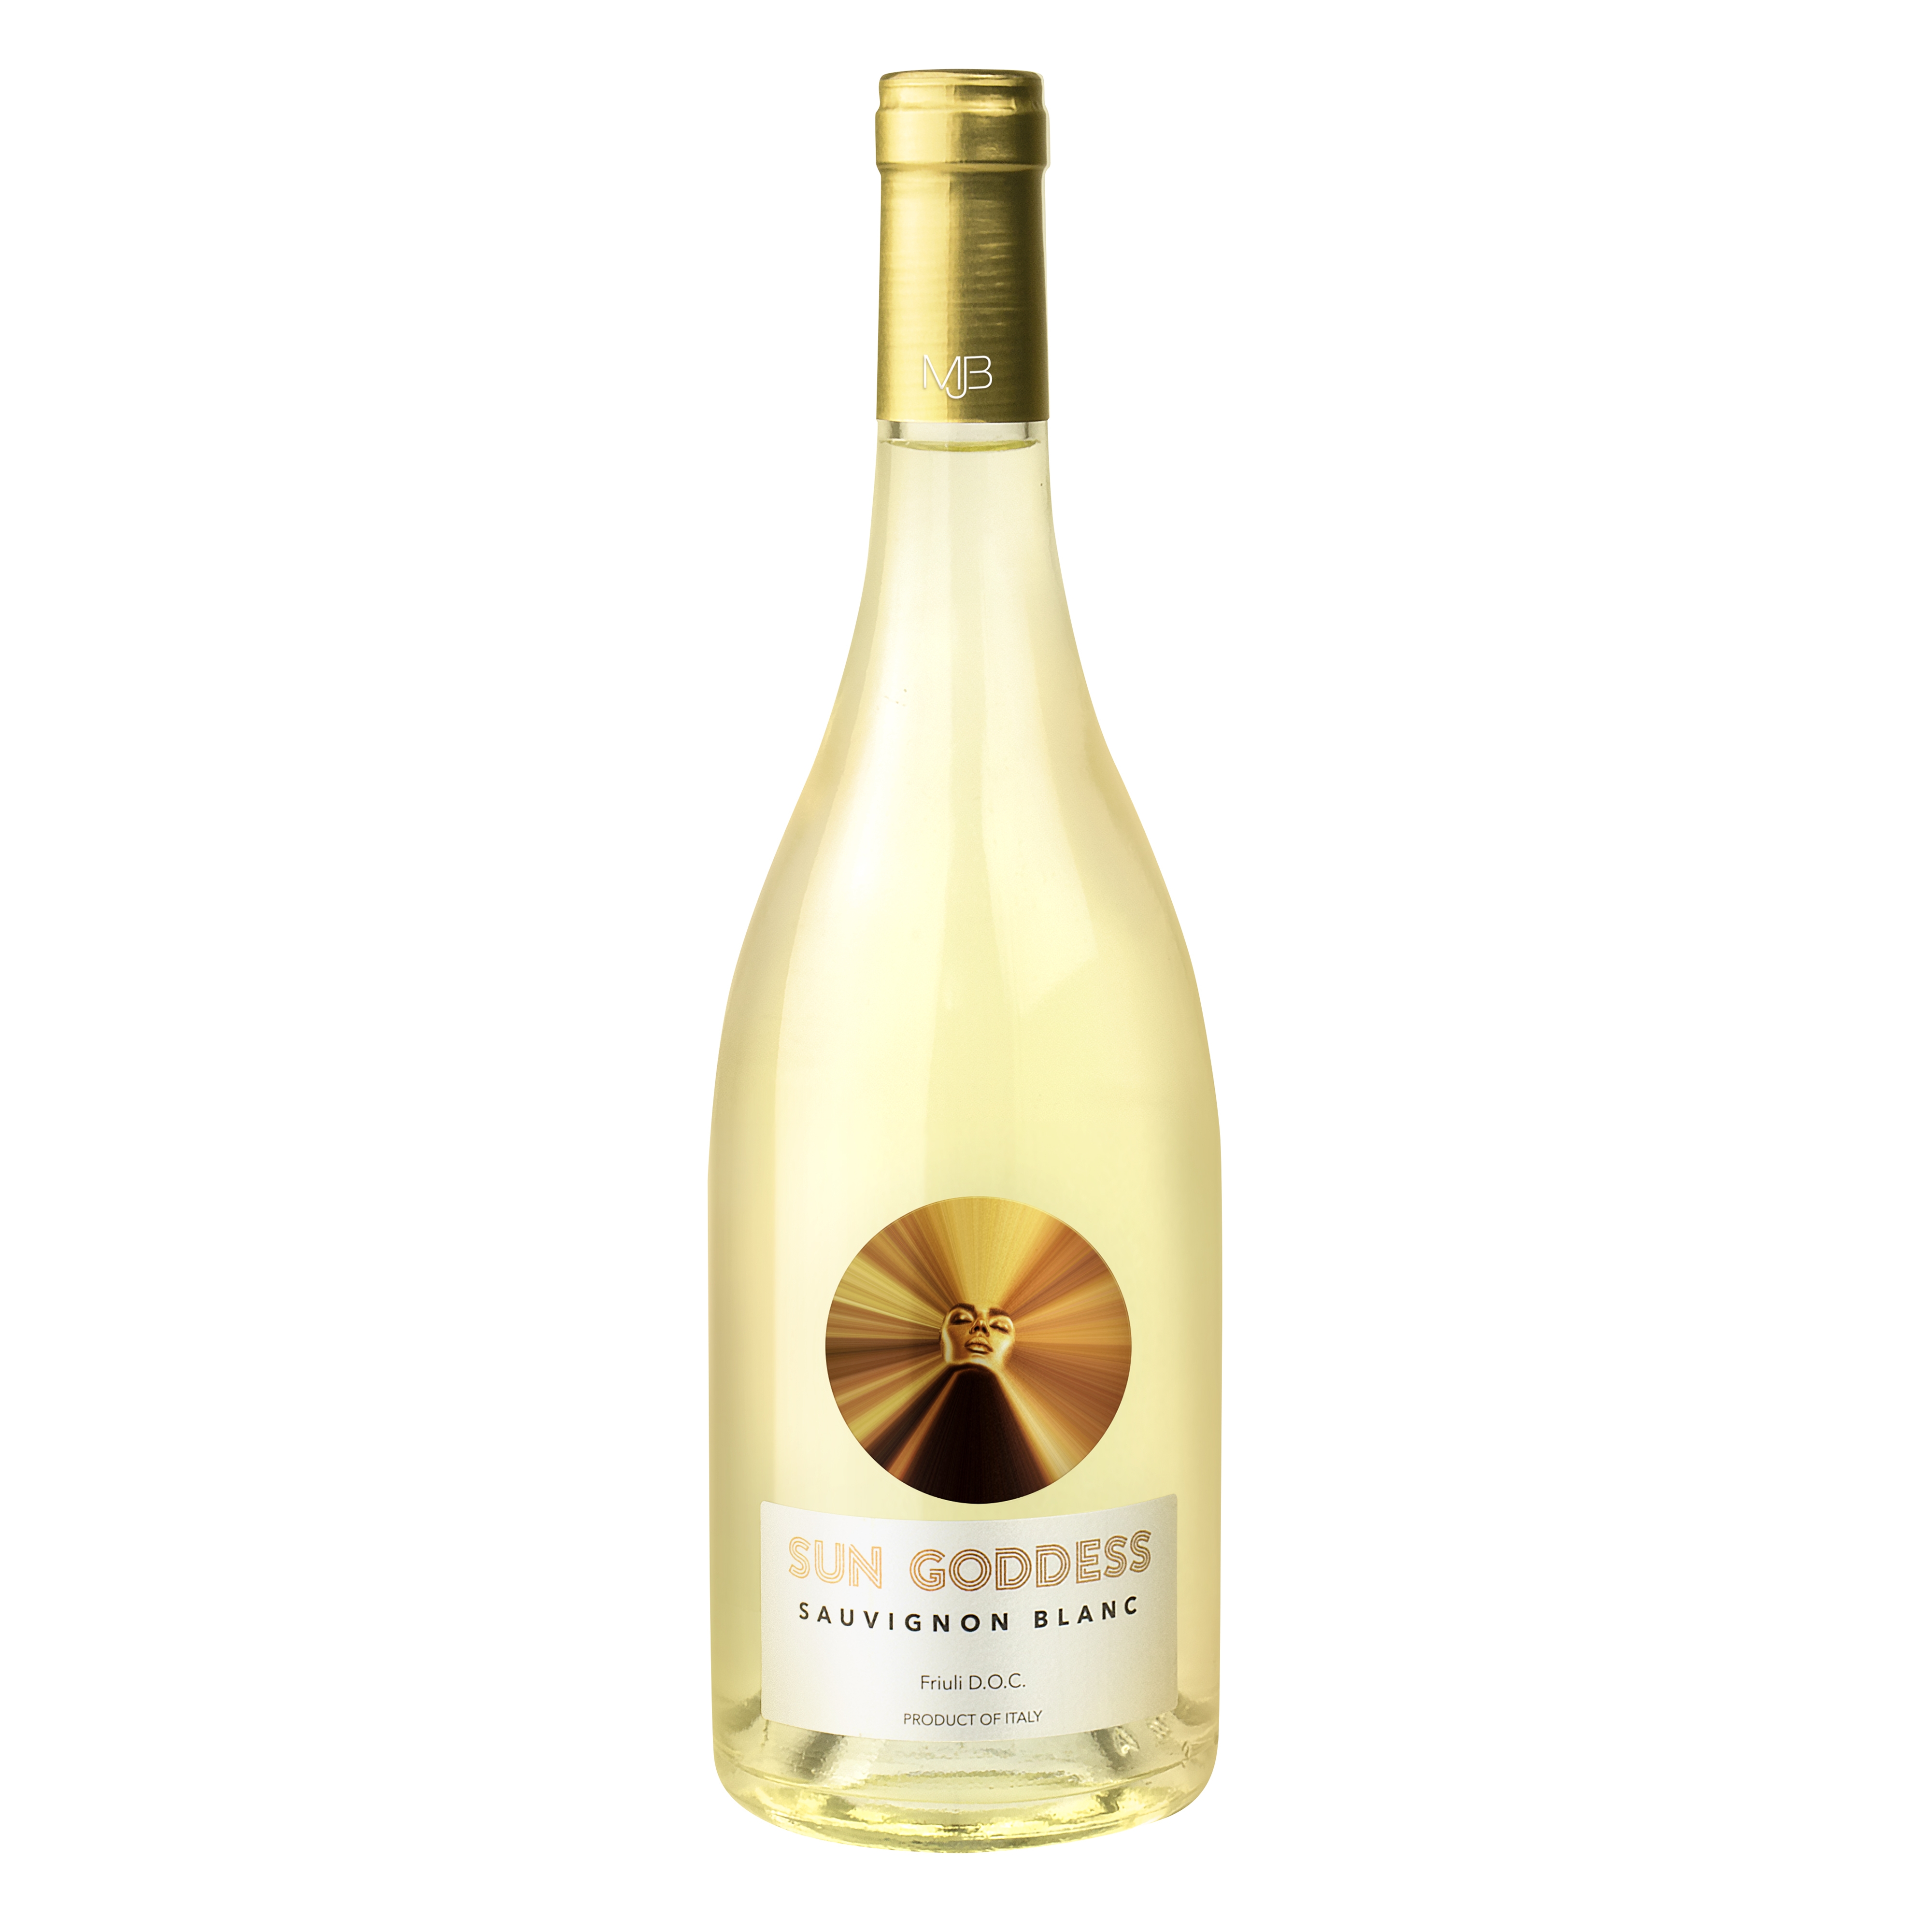 Sun Goddess - Fantinel - Sauvignon Blanc - Friuli D.O.C. - White Wine -  Official Mary J. Blige JBM Wine - Avvenice